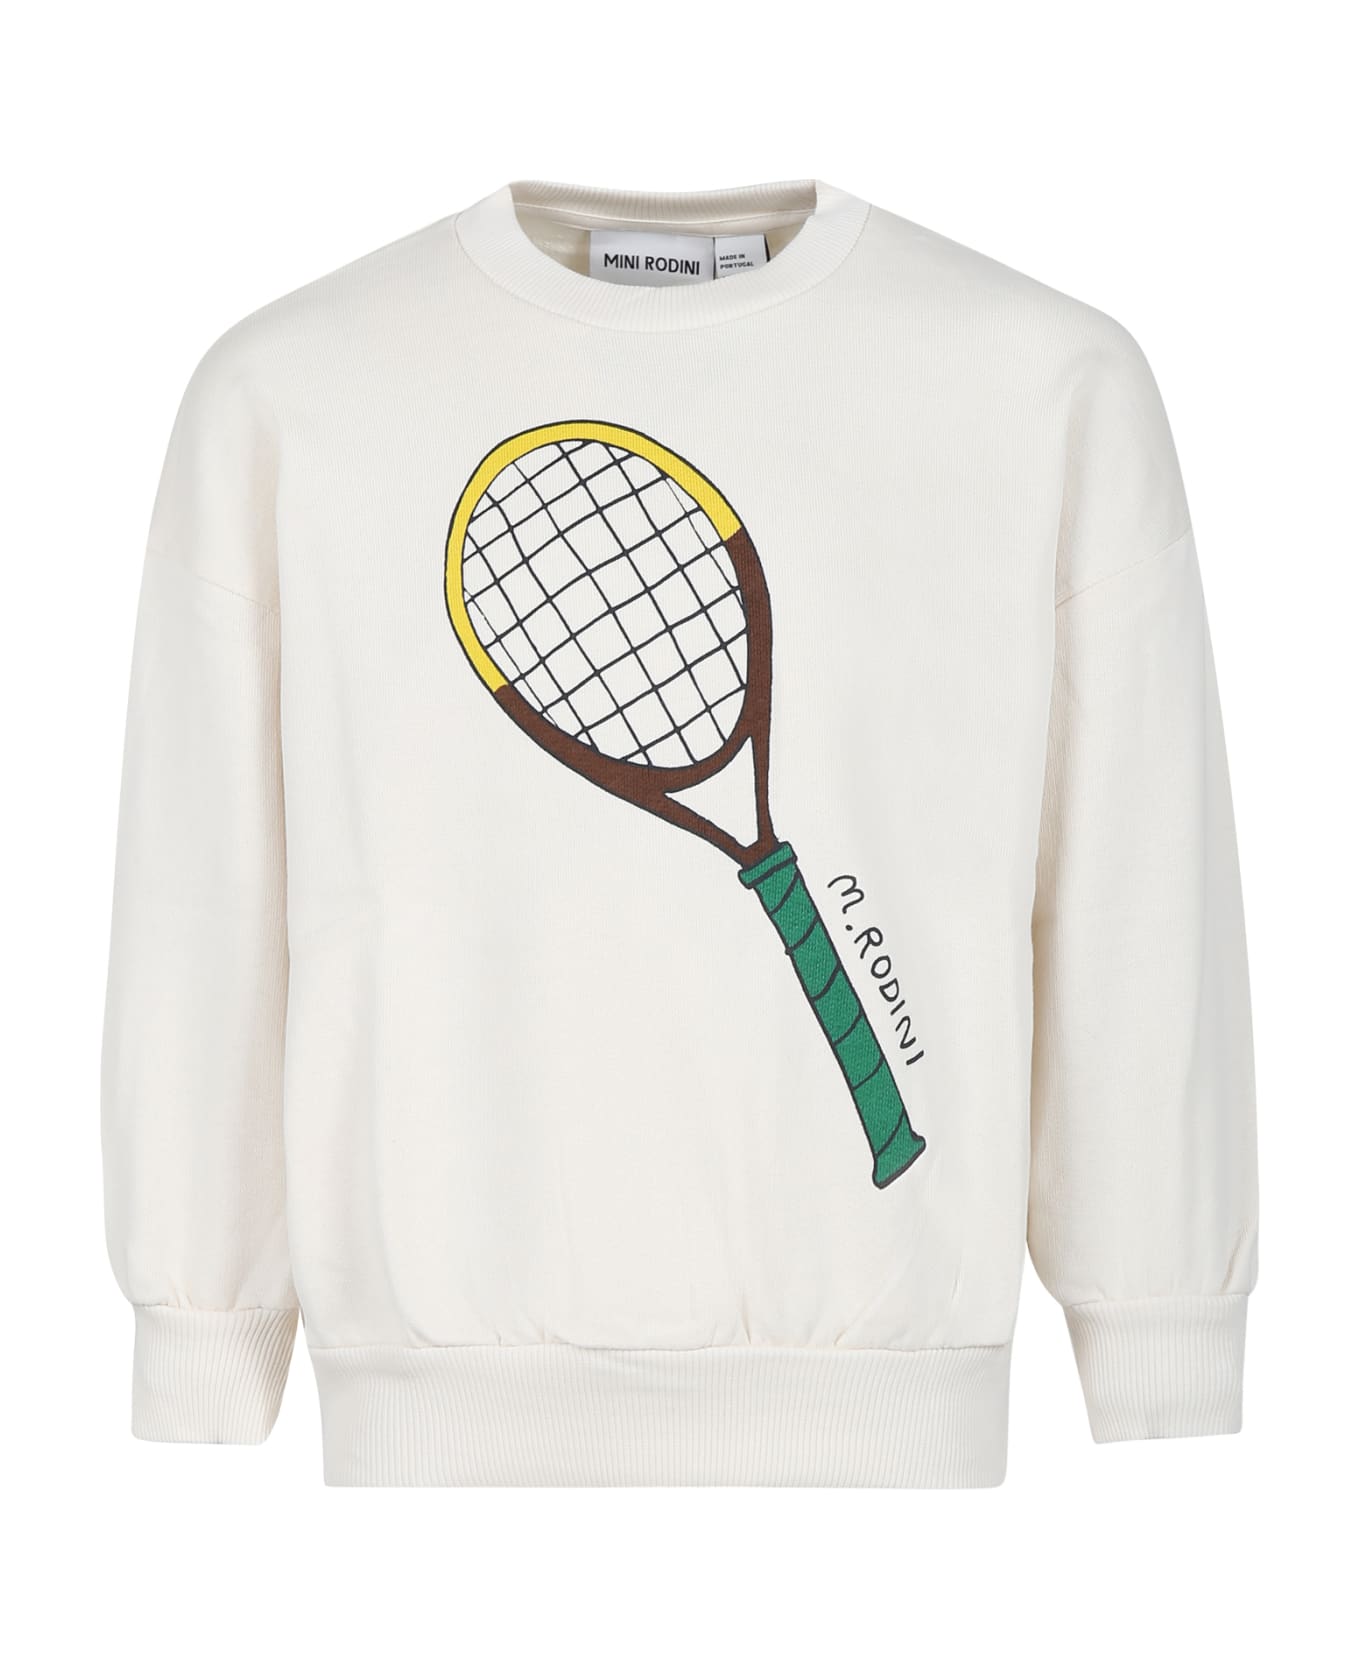 Mini Rodini Ivory Sweatshirt For Kids With Tennis Racket - Ivory